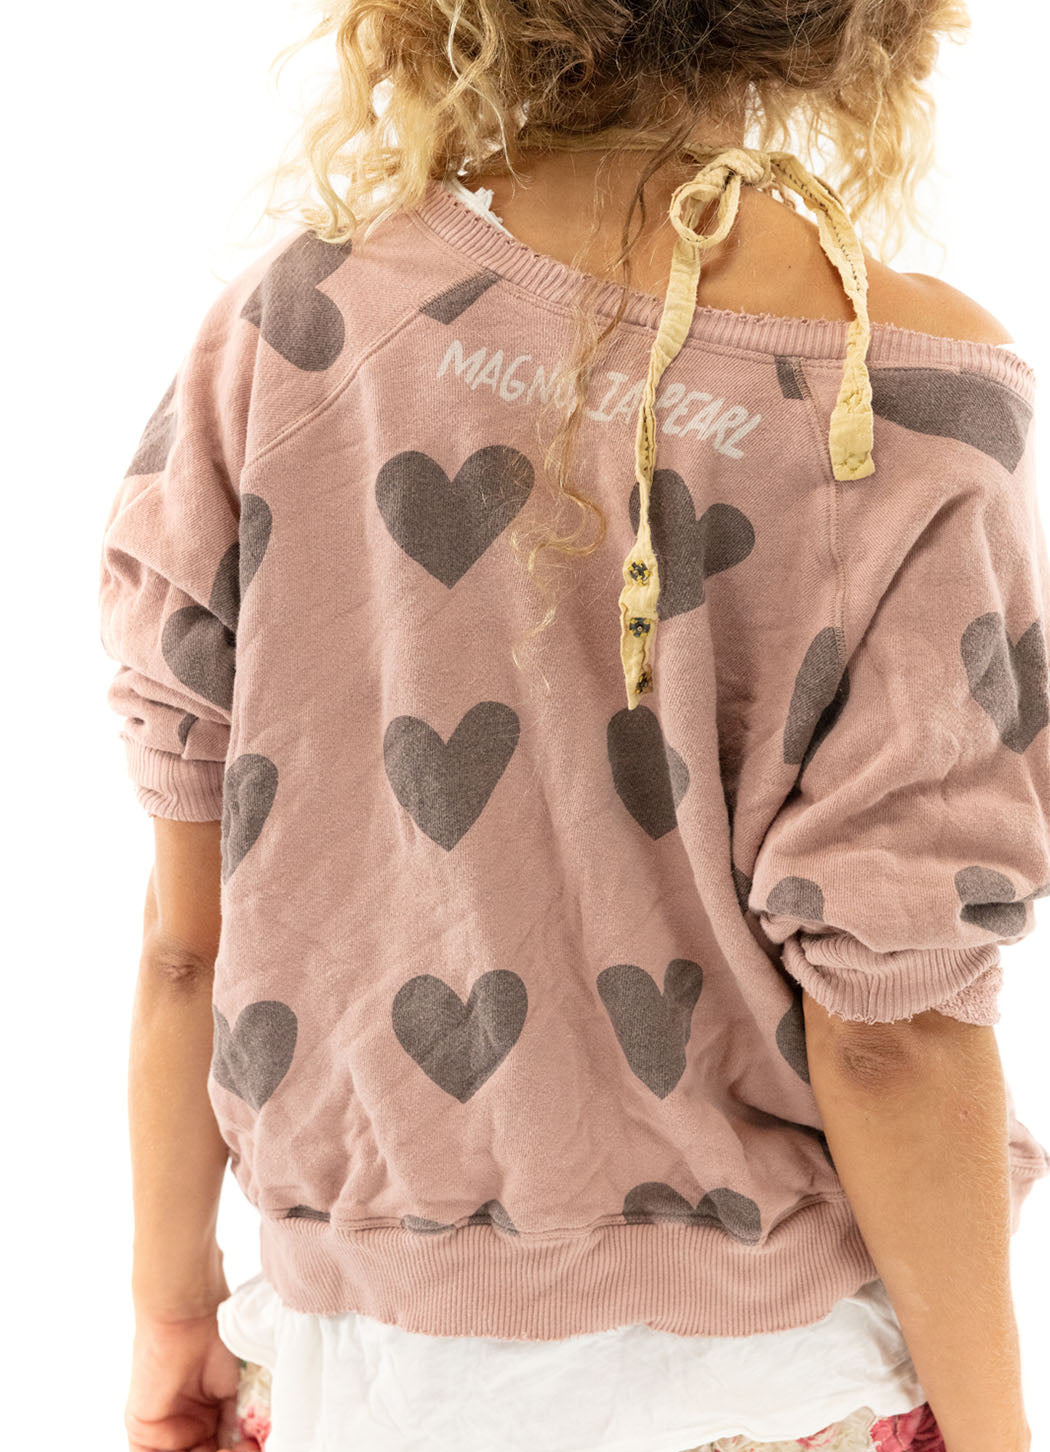 Soft Pink Leopard Print Heart Sweatshirt